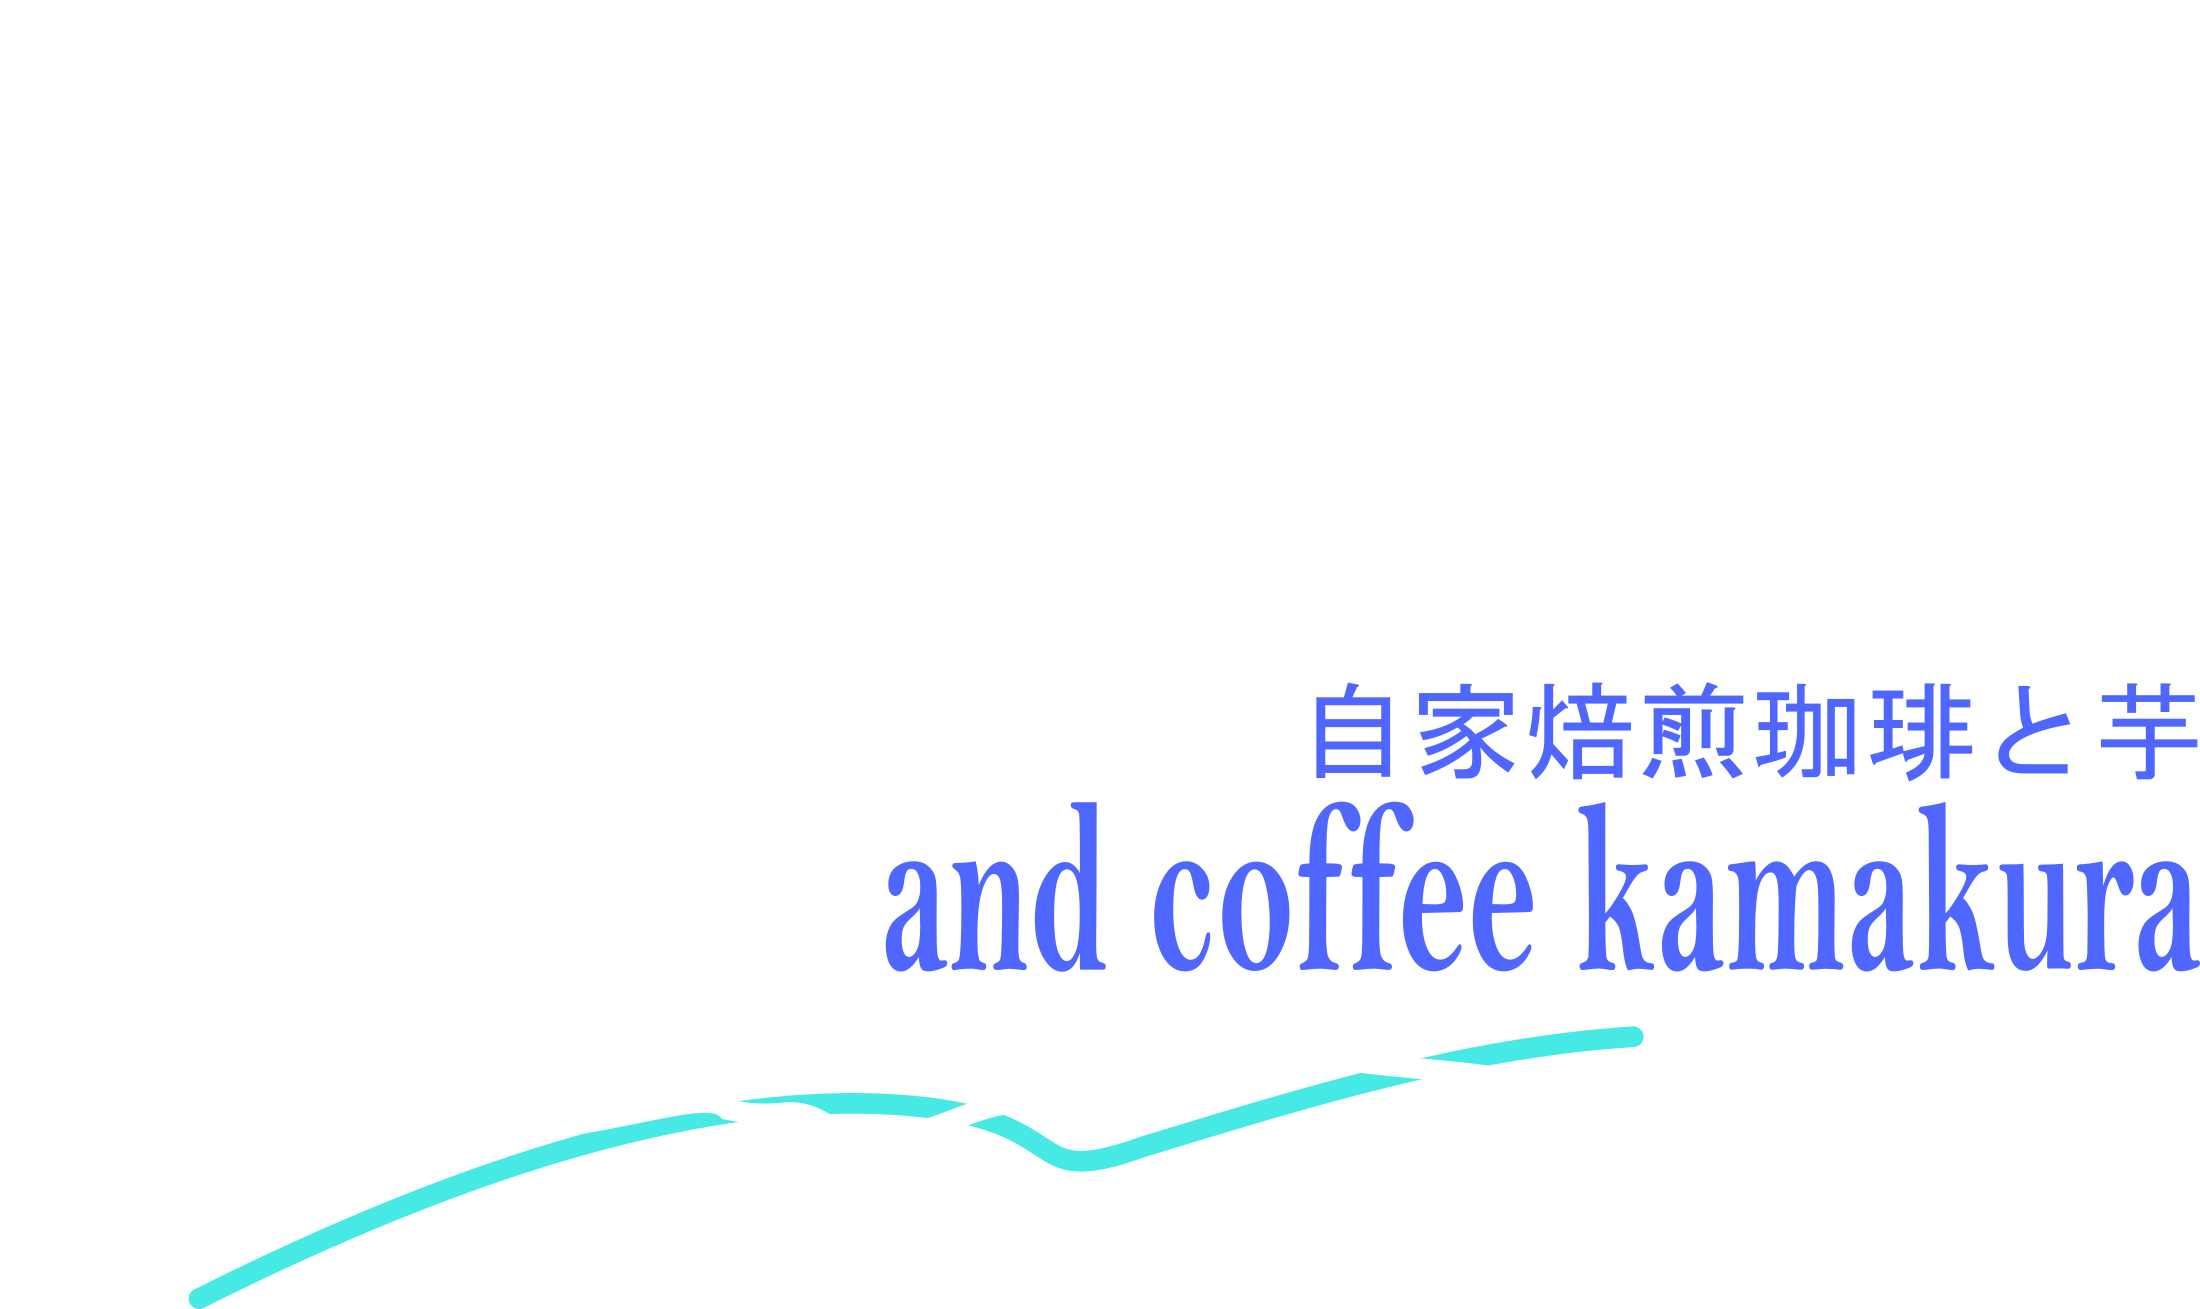 and coffee kamakura